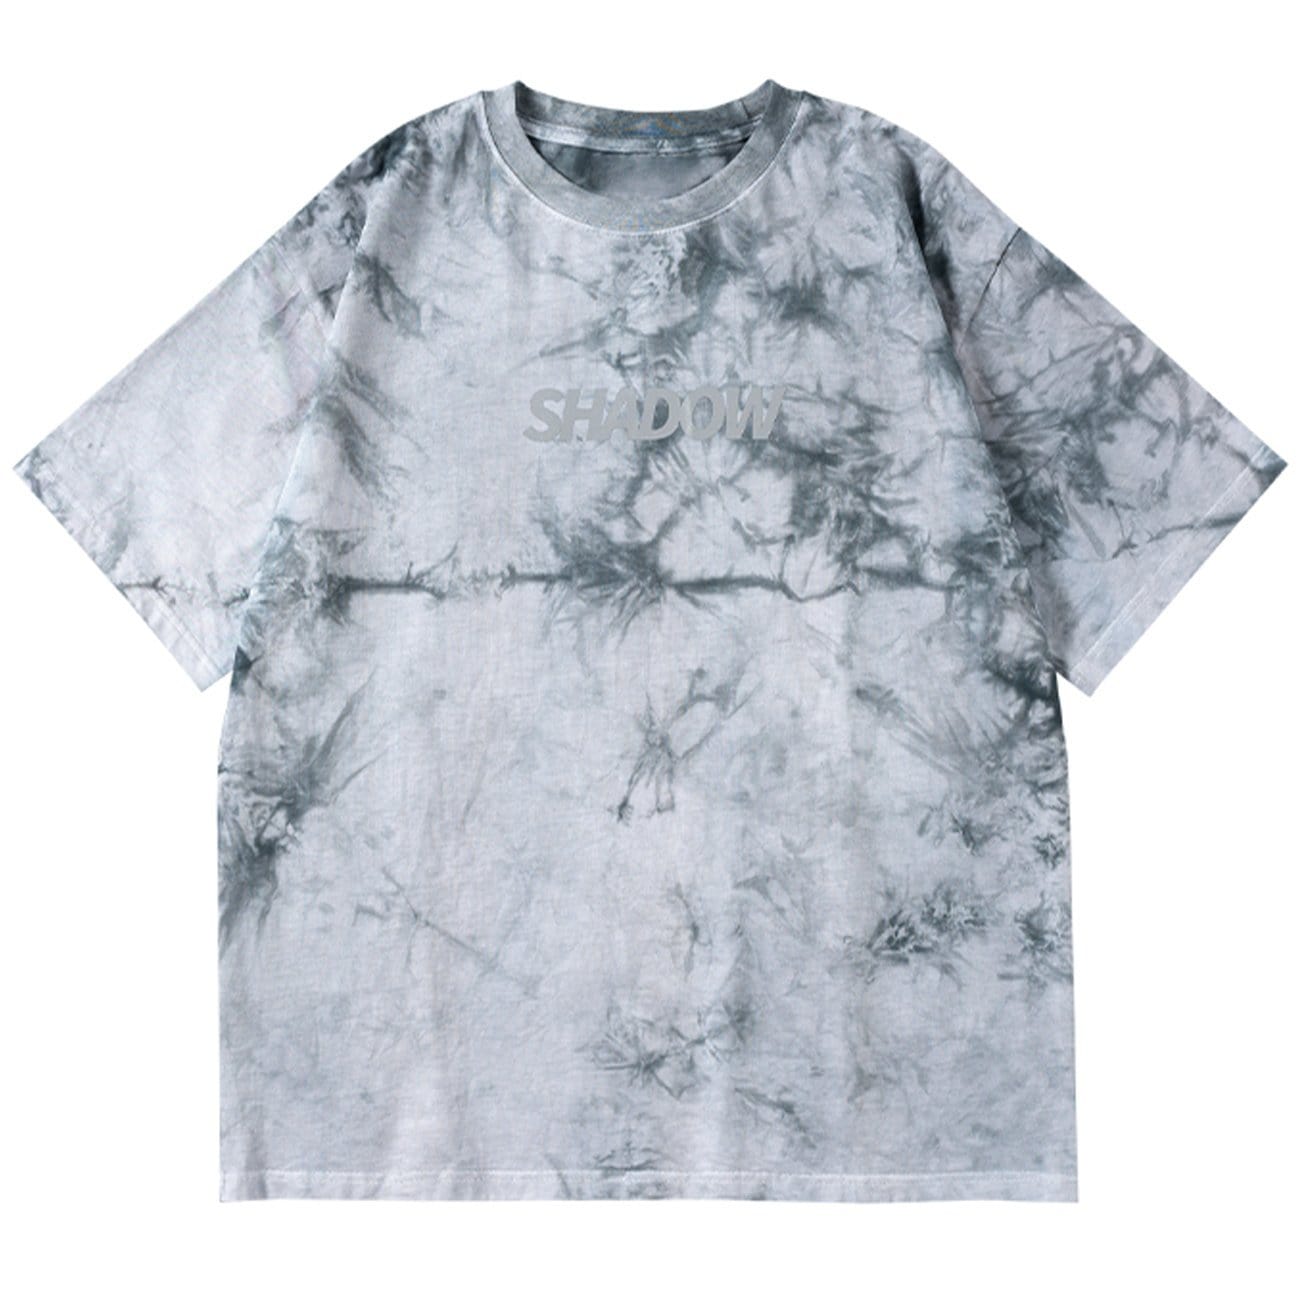 Tie-dye Reflective Letters Cotton Graphic T-Shirt